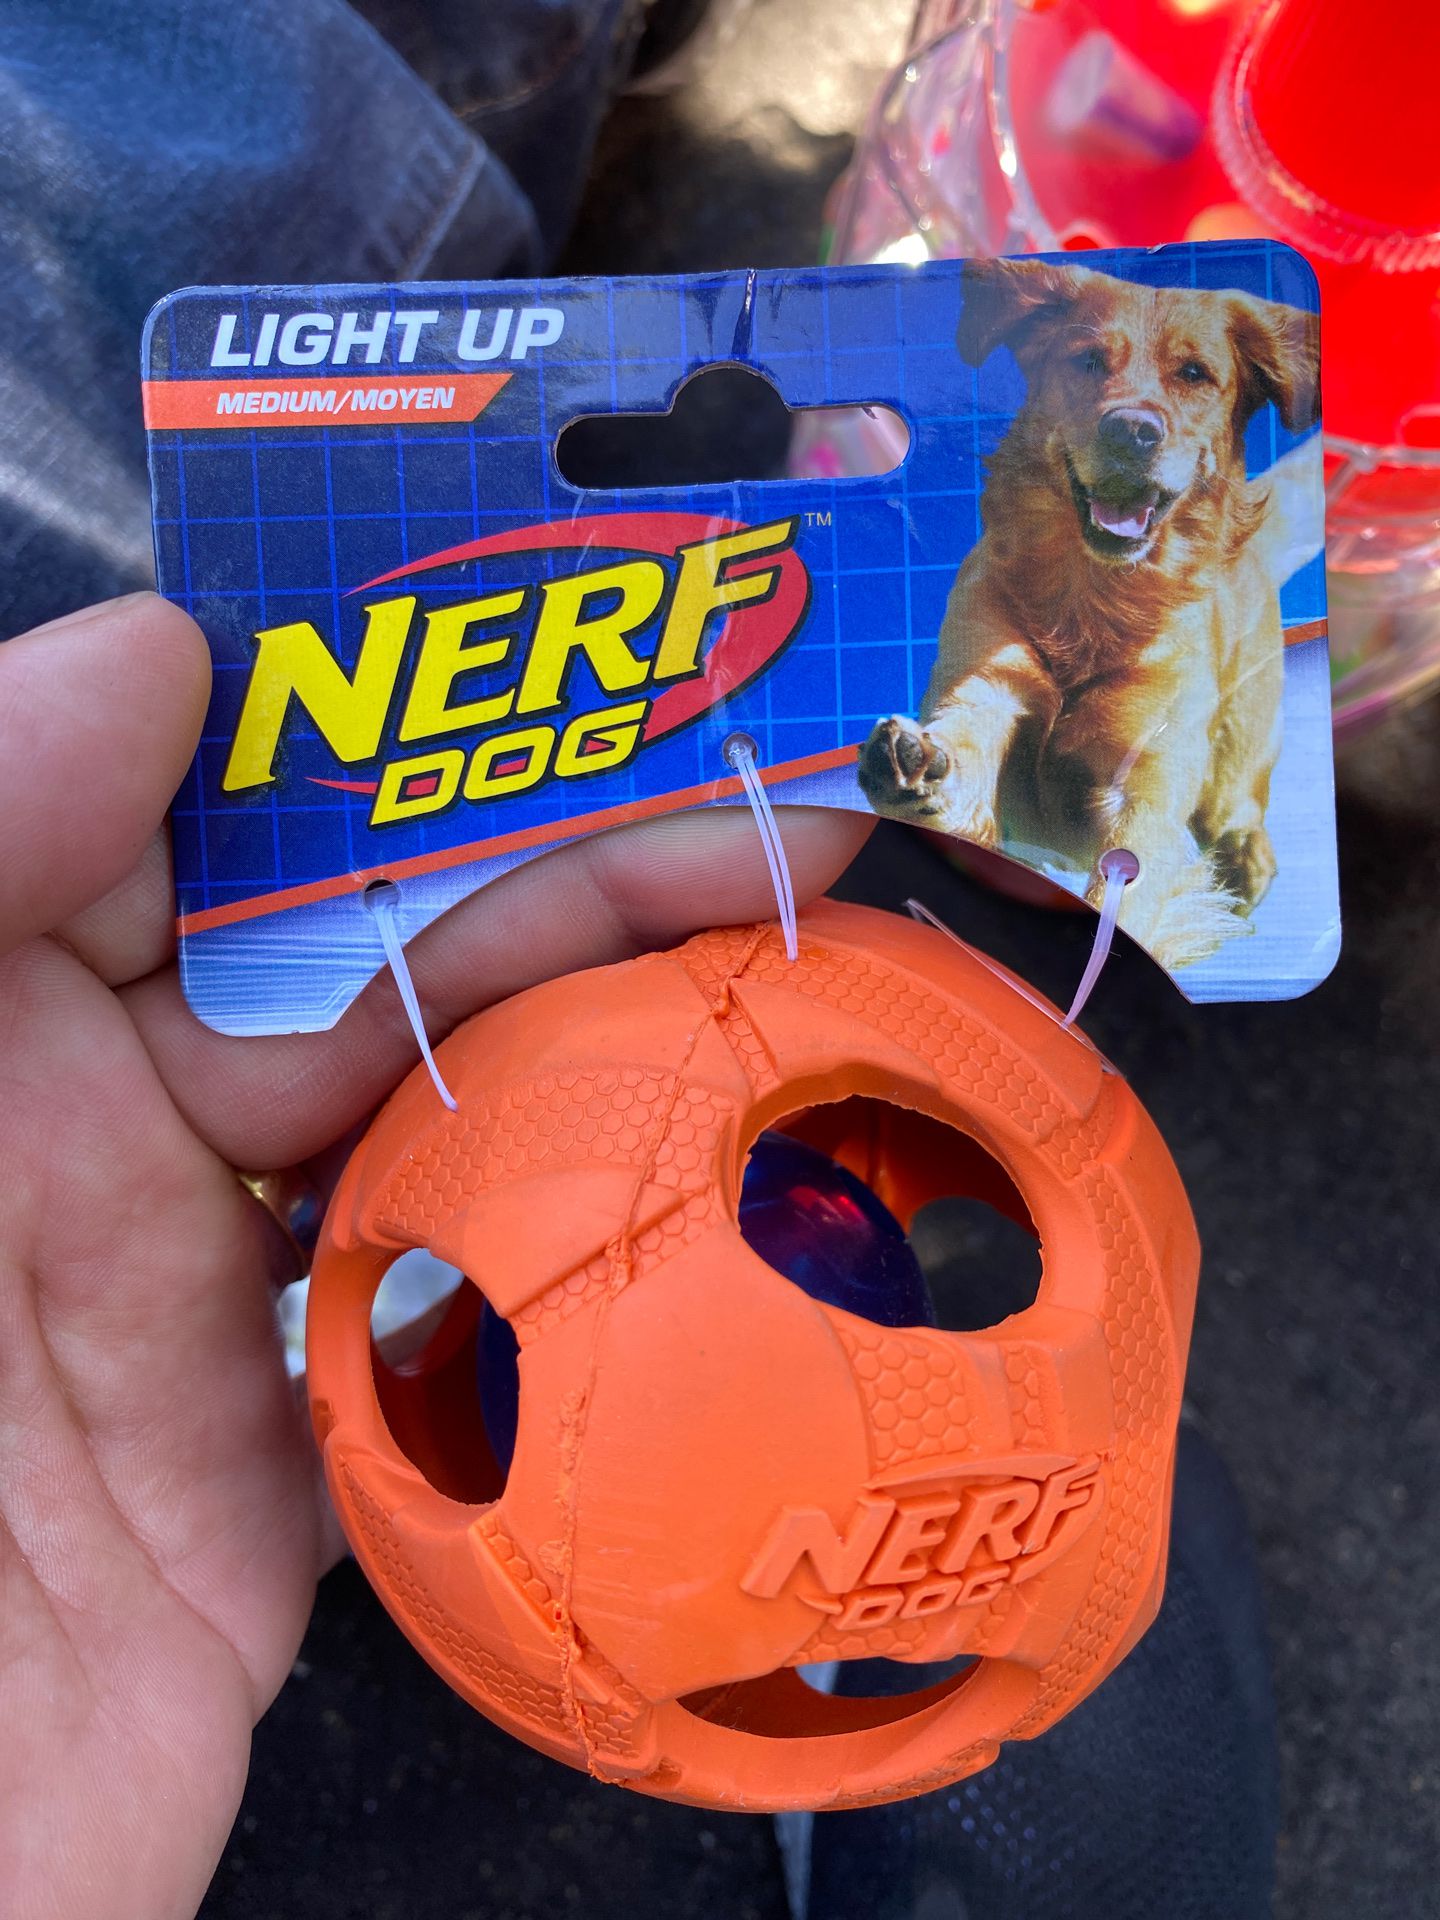 Nerf dog ball mediums